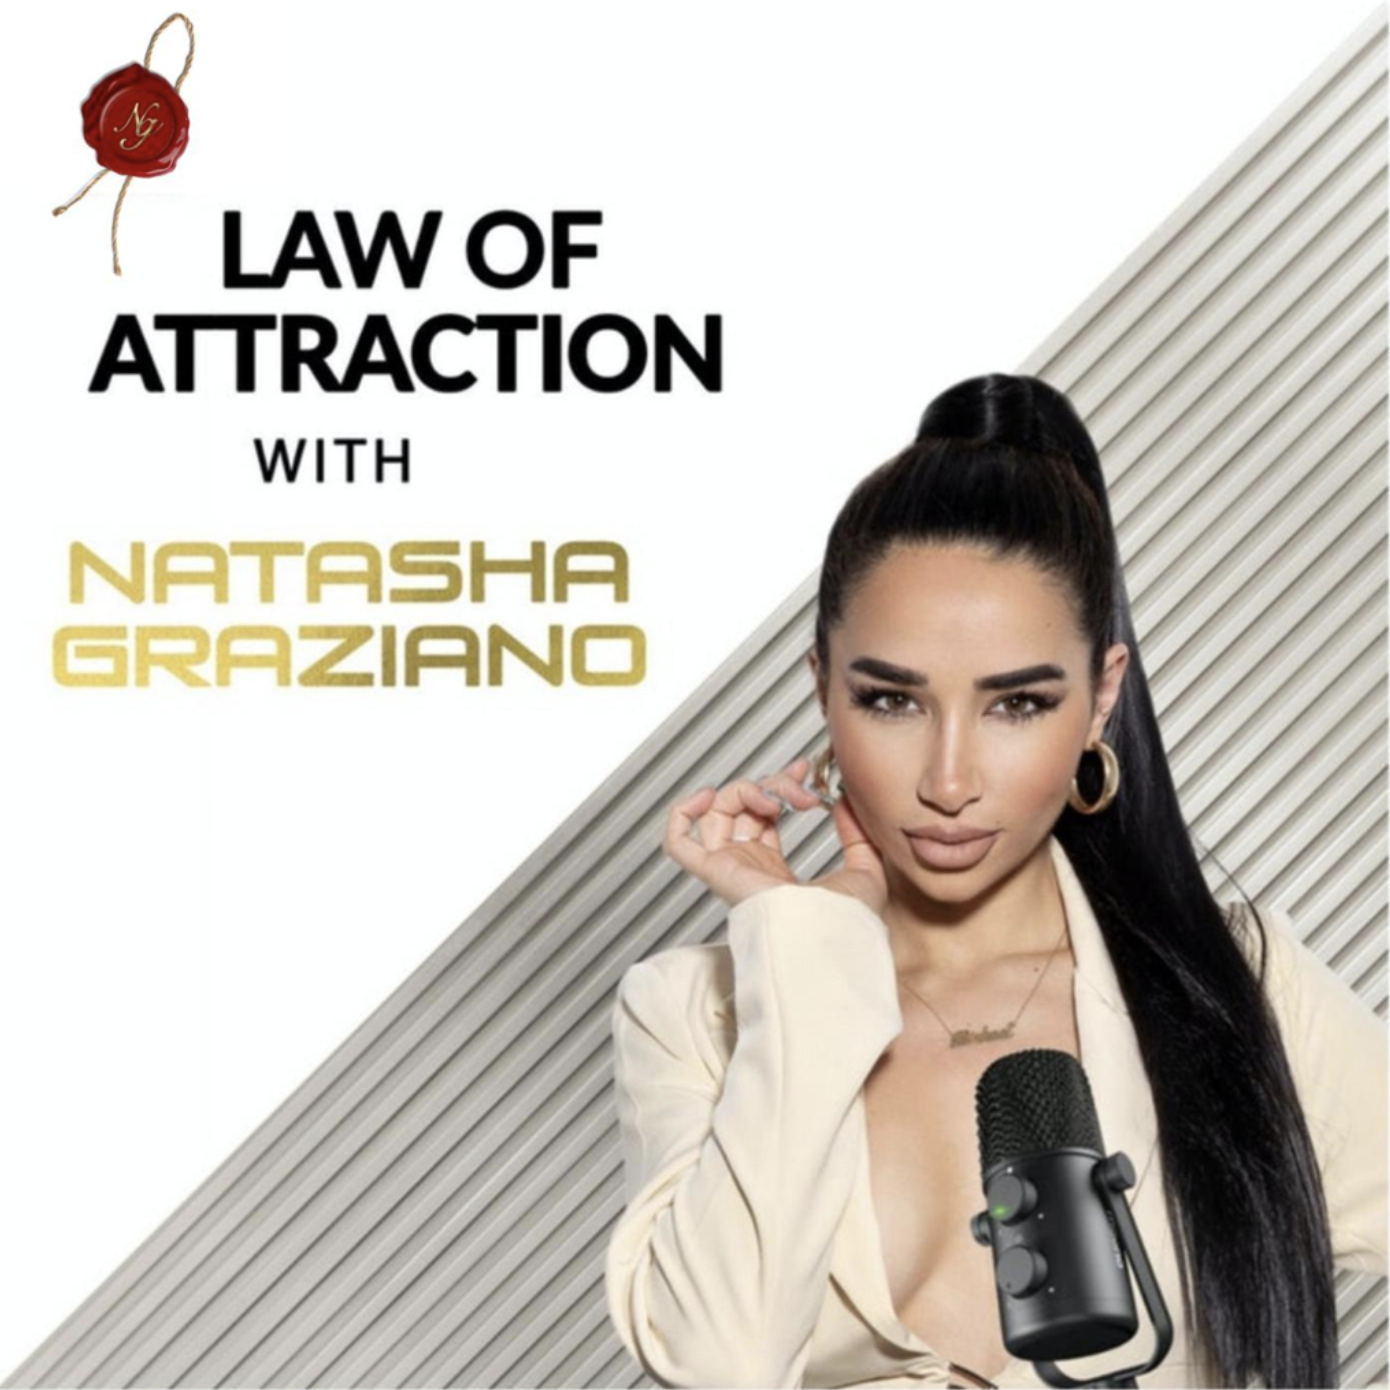 Law of Attraction with Natasha Graziano